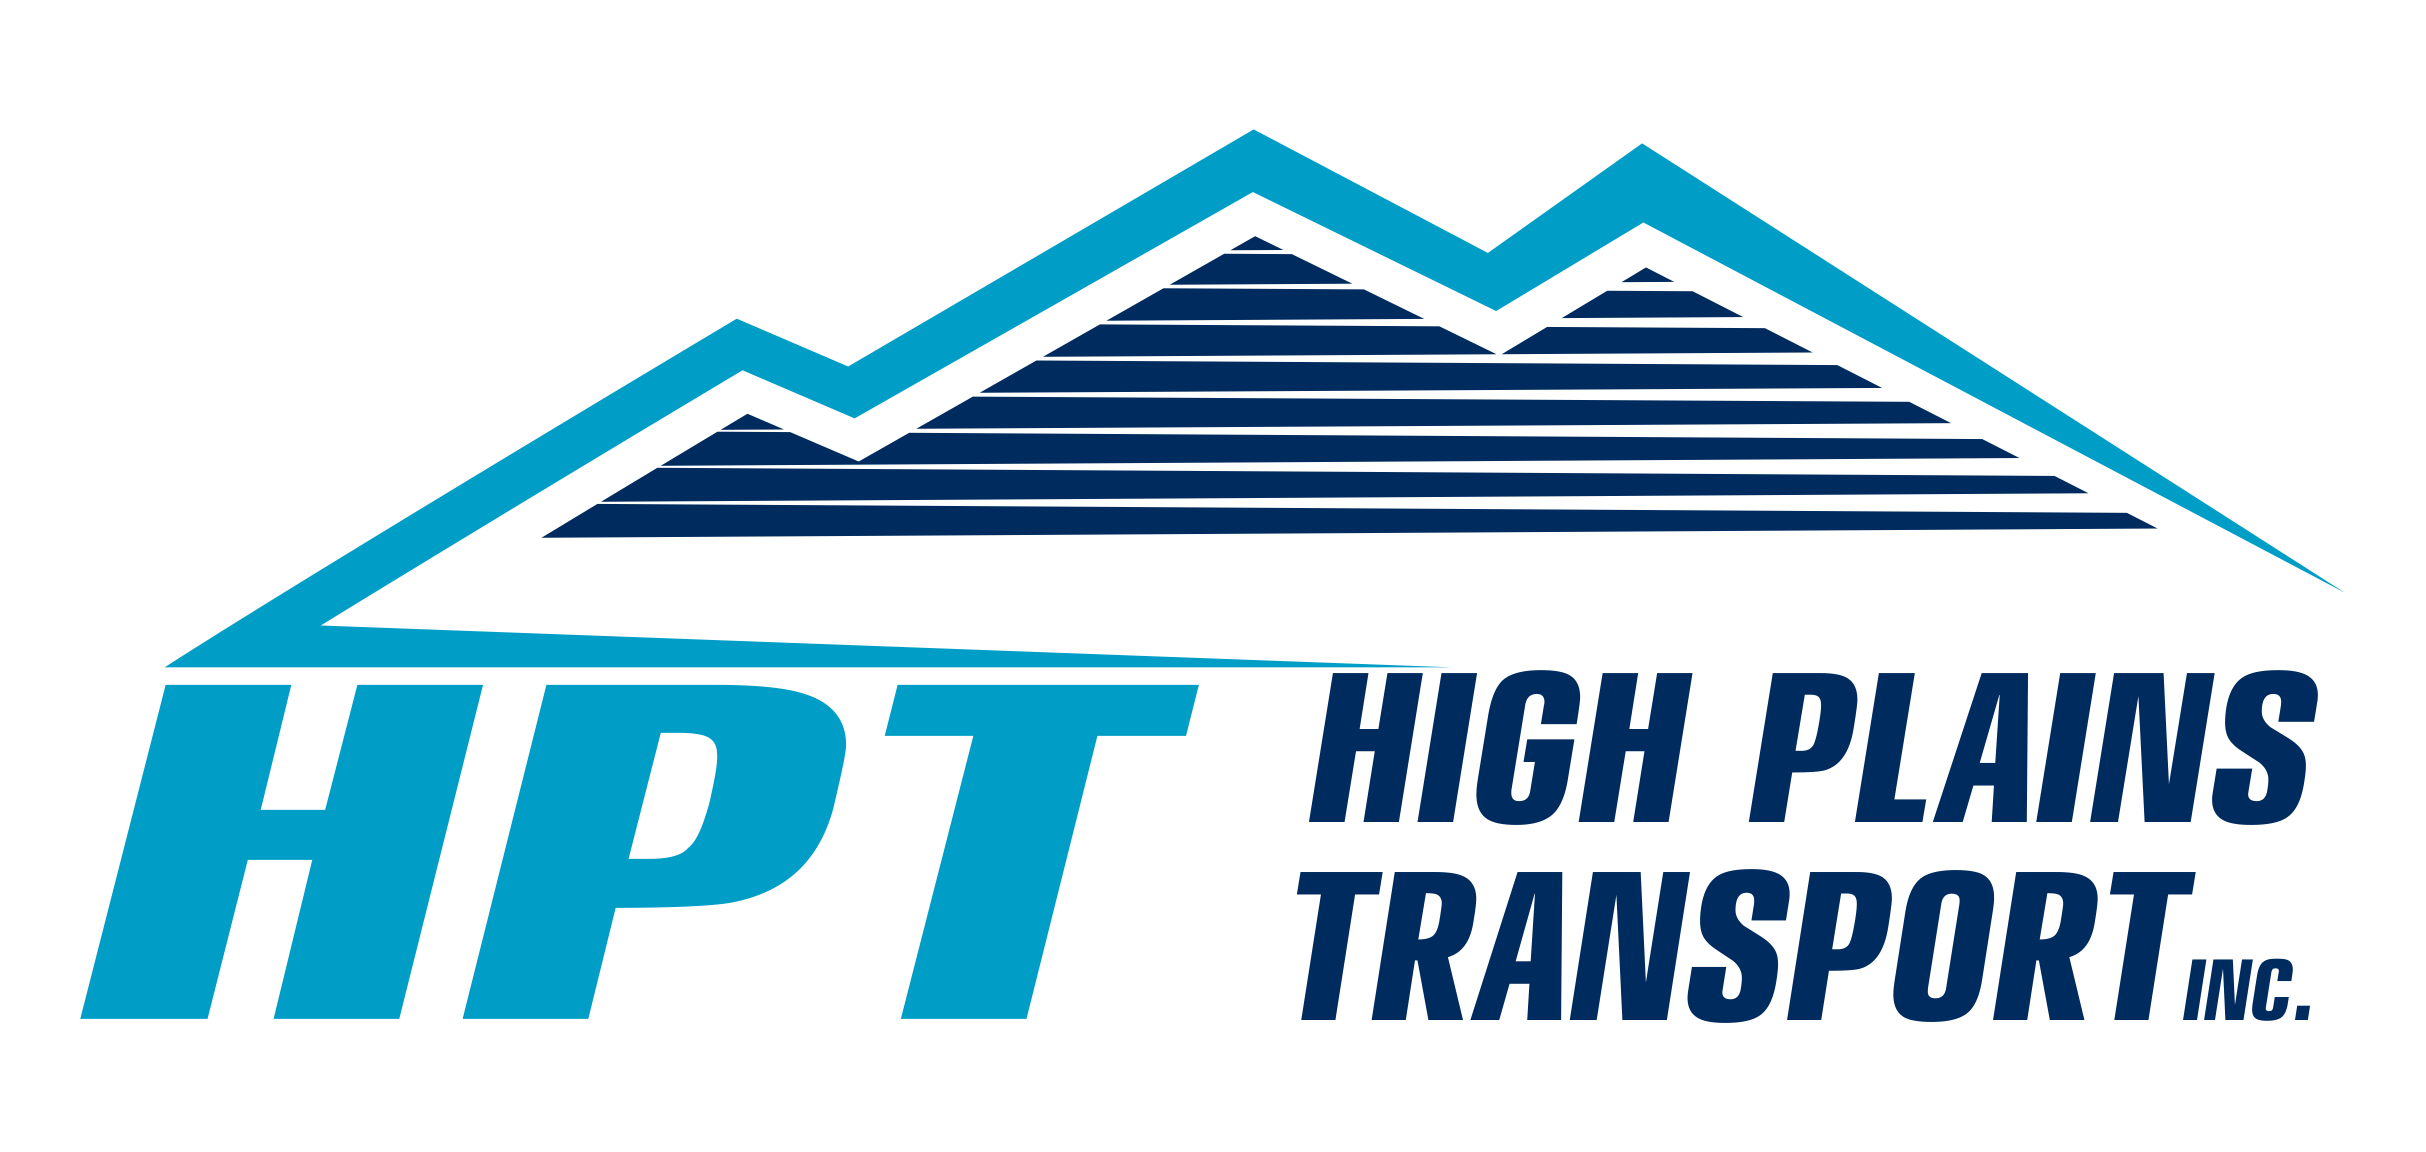 High Plains Transport Inc. Logo